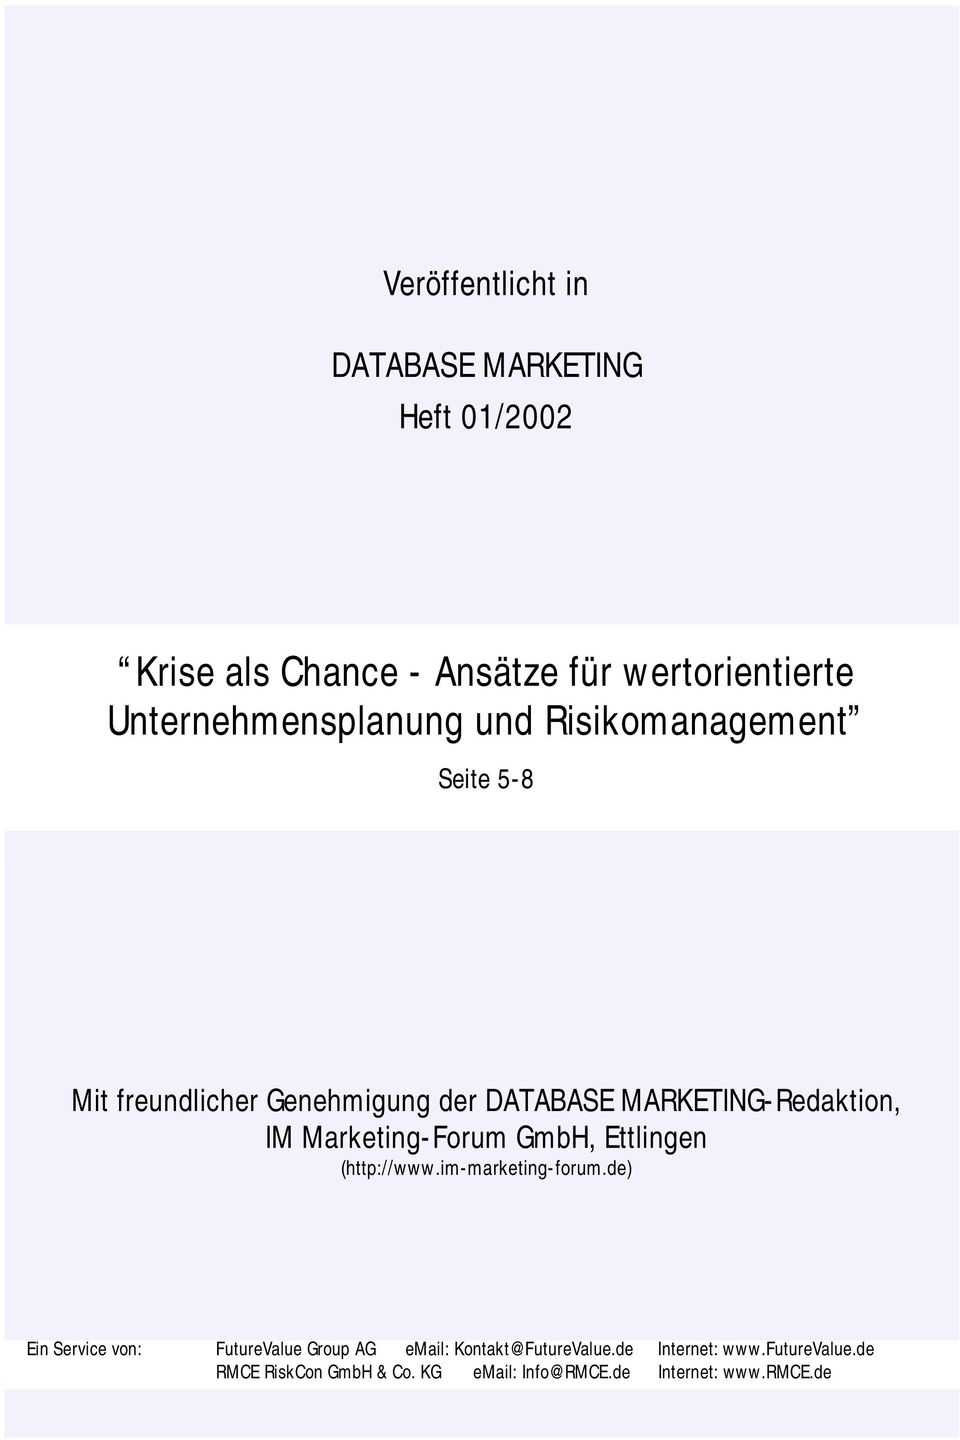 MARKETING-Redaktion, IM Marketing-Forum GmbH, Ettlingen (http://www.im-marketing-forum.